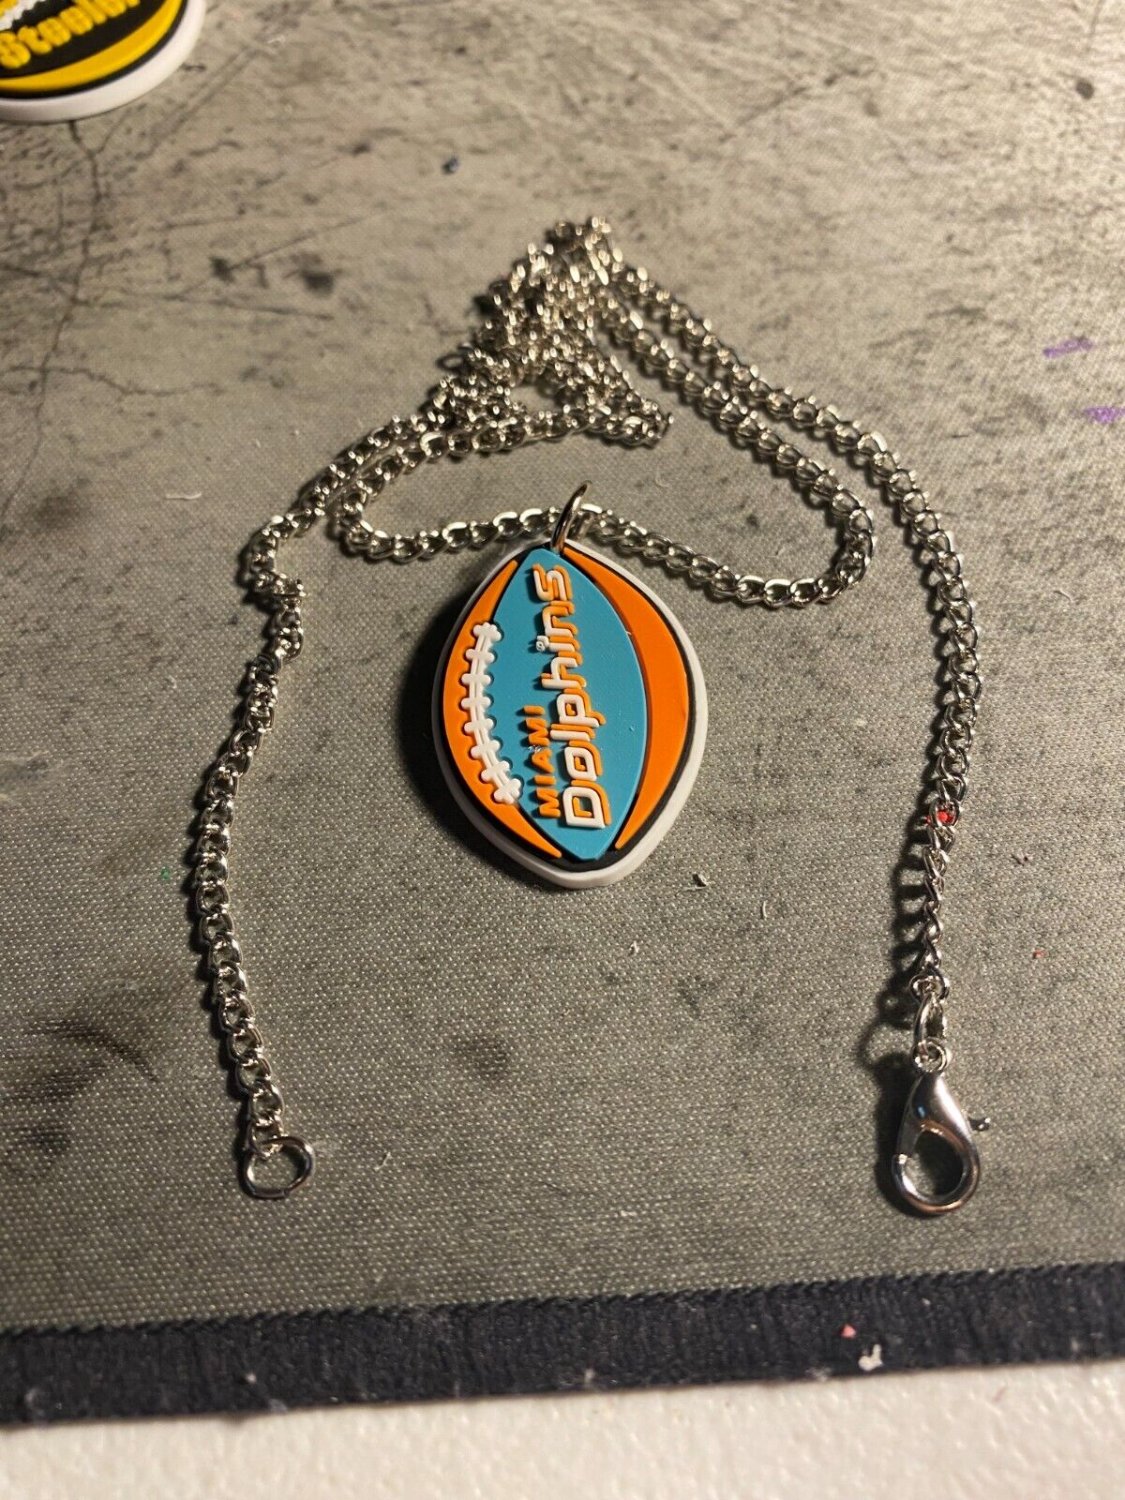 Miami Dolphins necklace